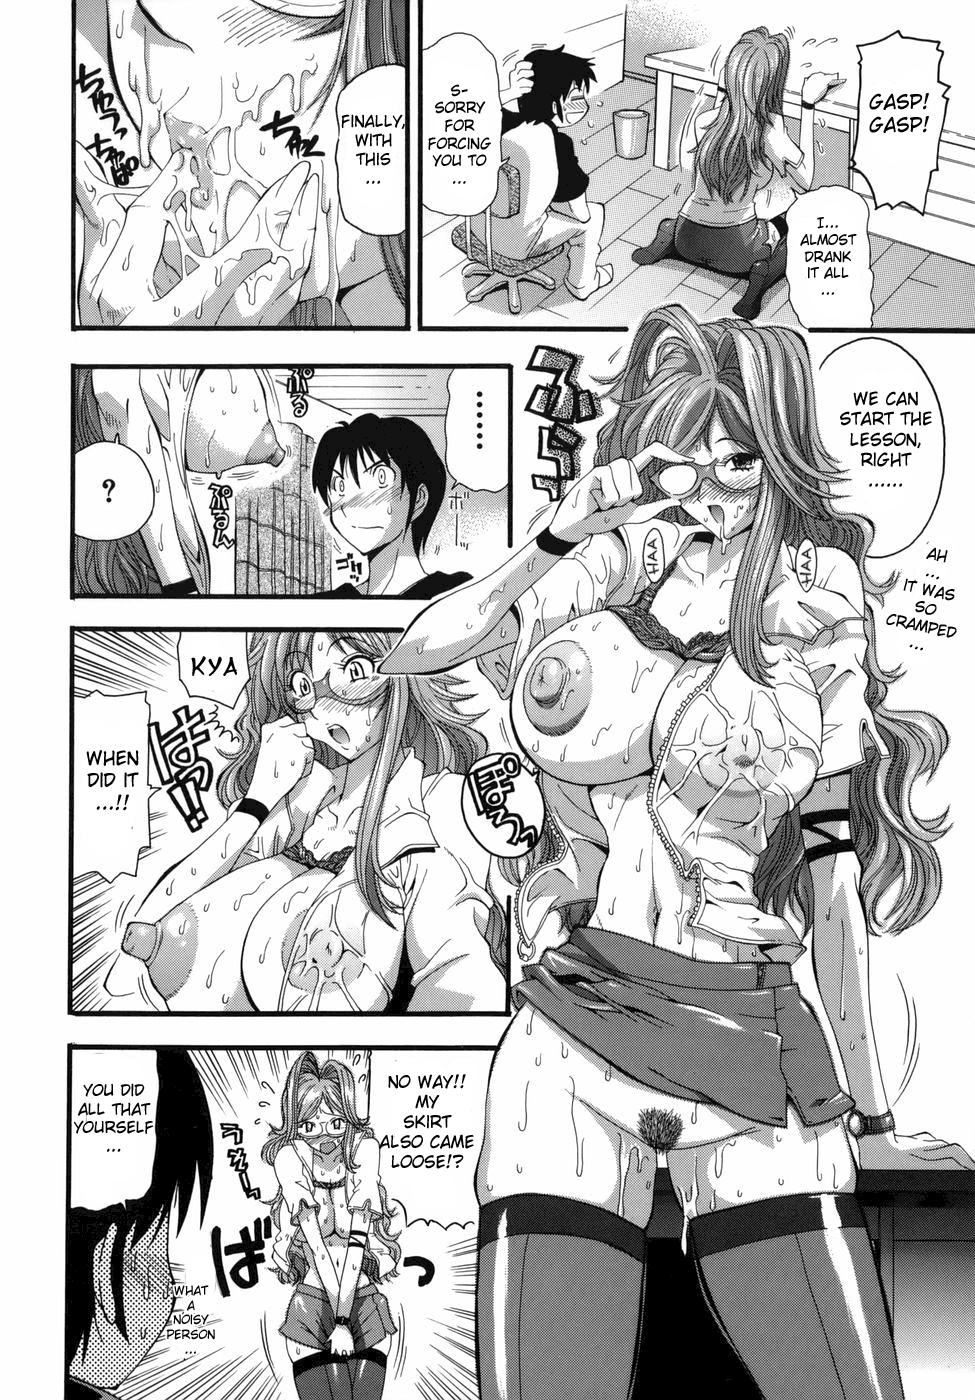 Daring One More Lesson, Haruka-sensei Gang - Page 10